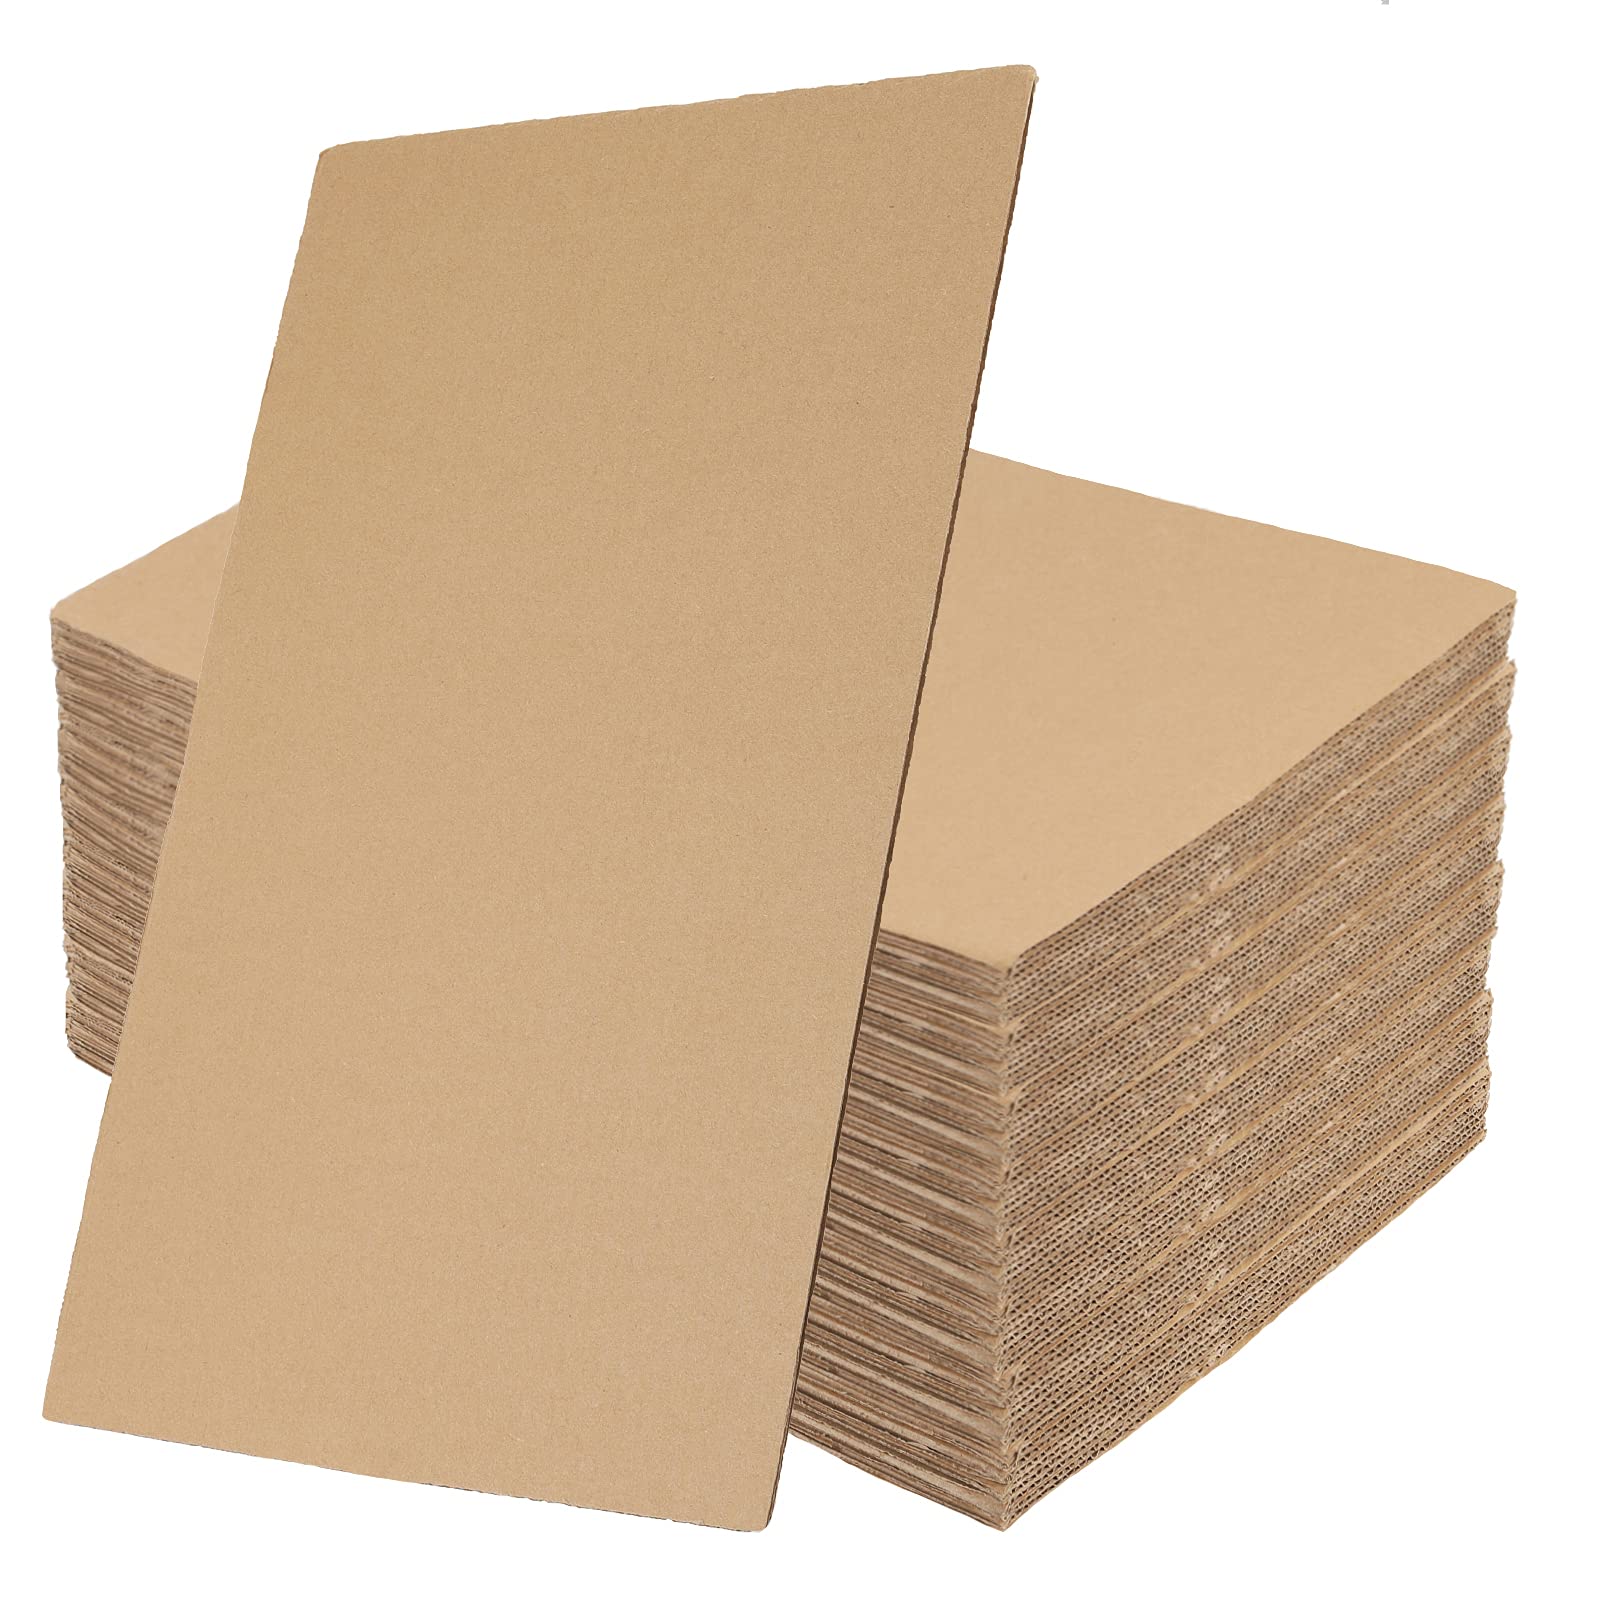 SHEUTSAN 100 Pack 8.5 x 11 Inches Chipboard Sheets,Medium Weight